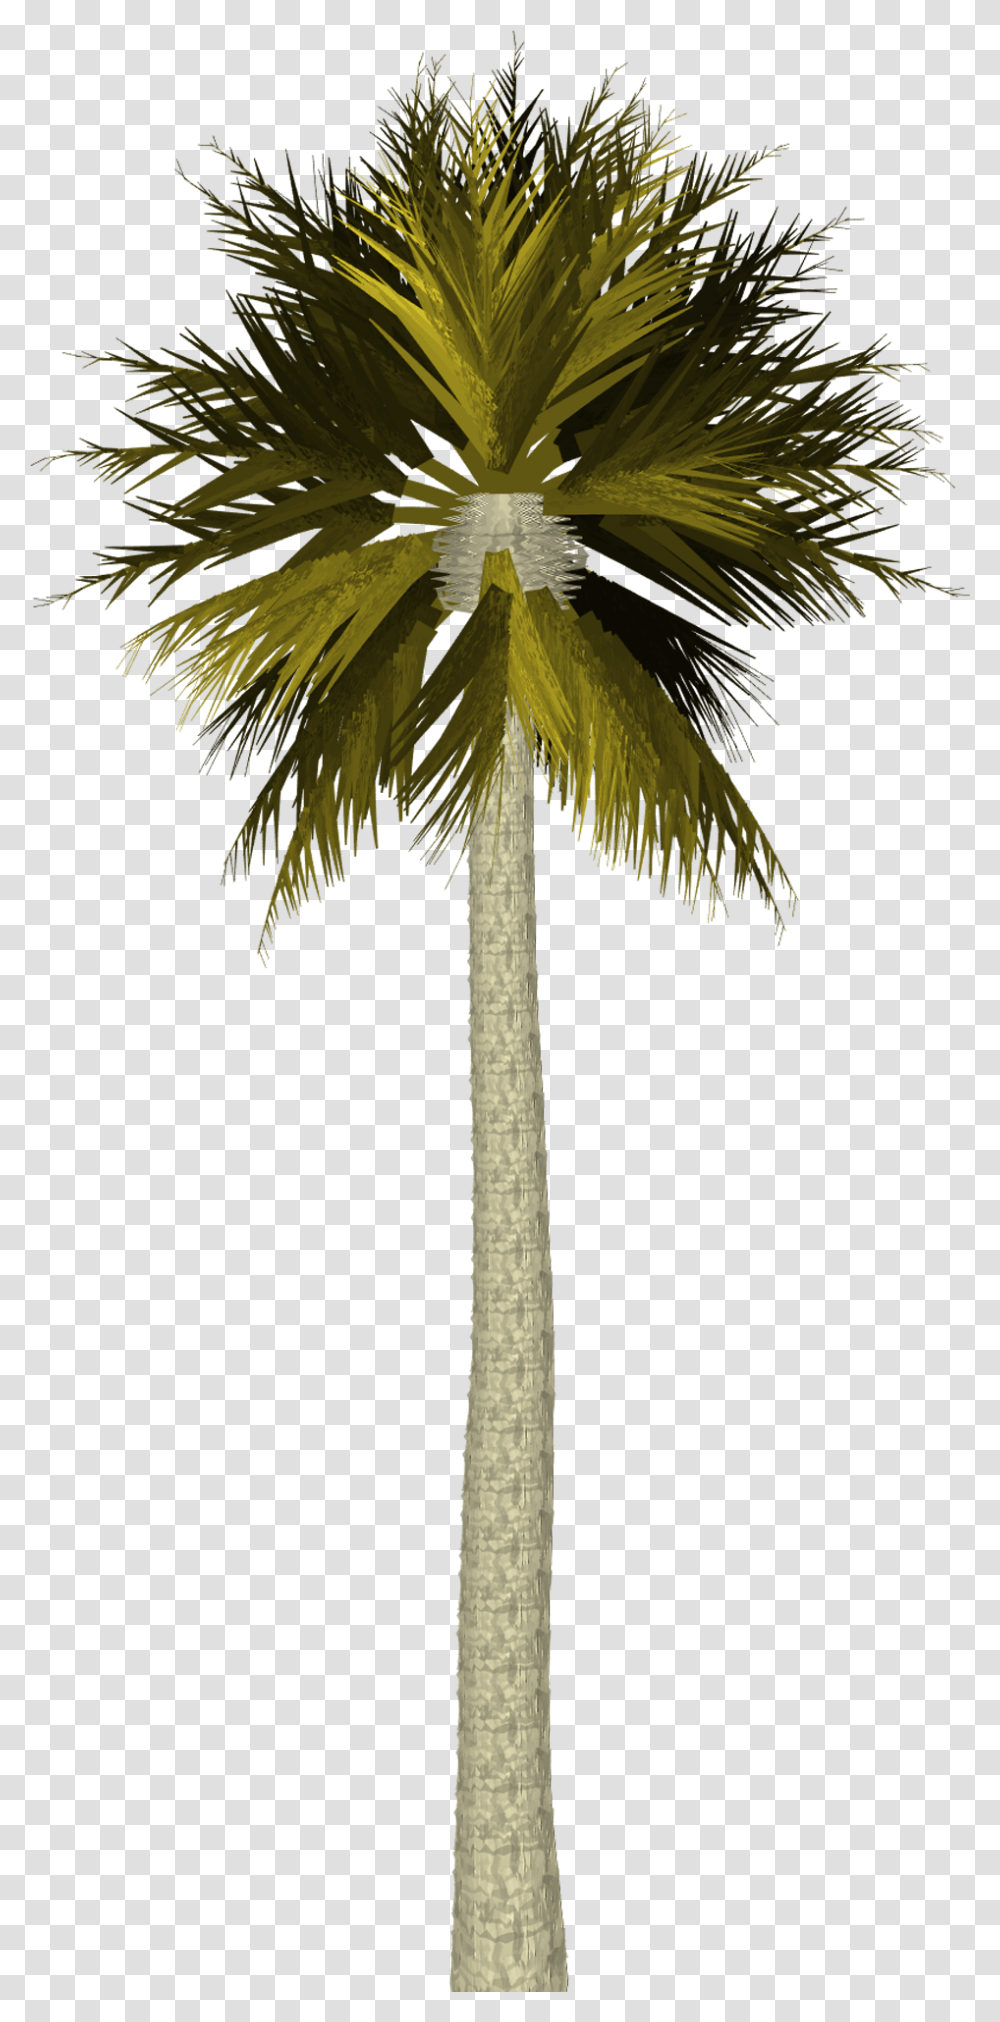 Palm Tree Free Image On Pixabay Palm Tree Photoshop, Plant, Flower, Flare, Light Transparent Png